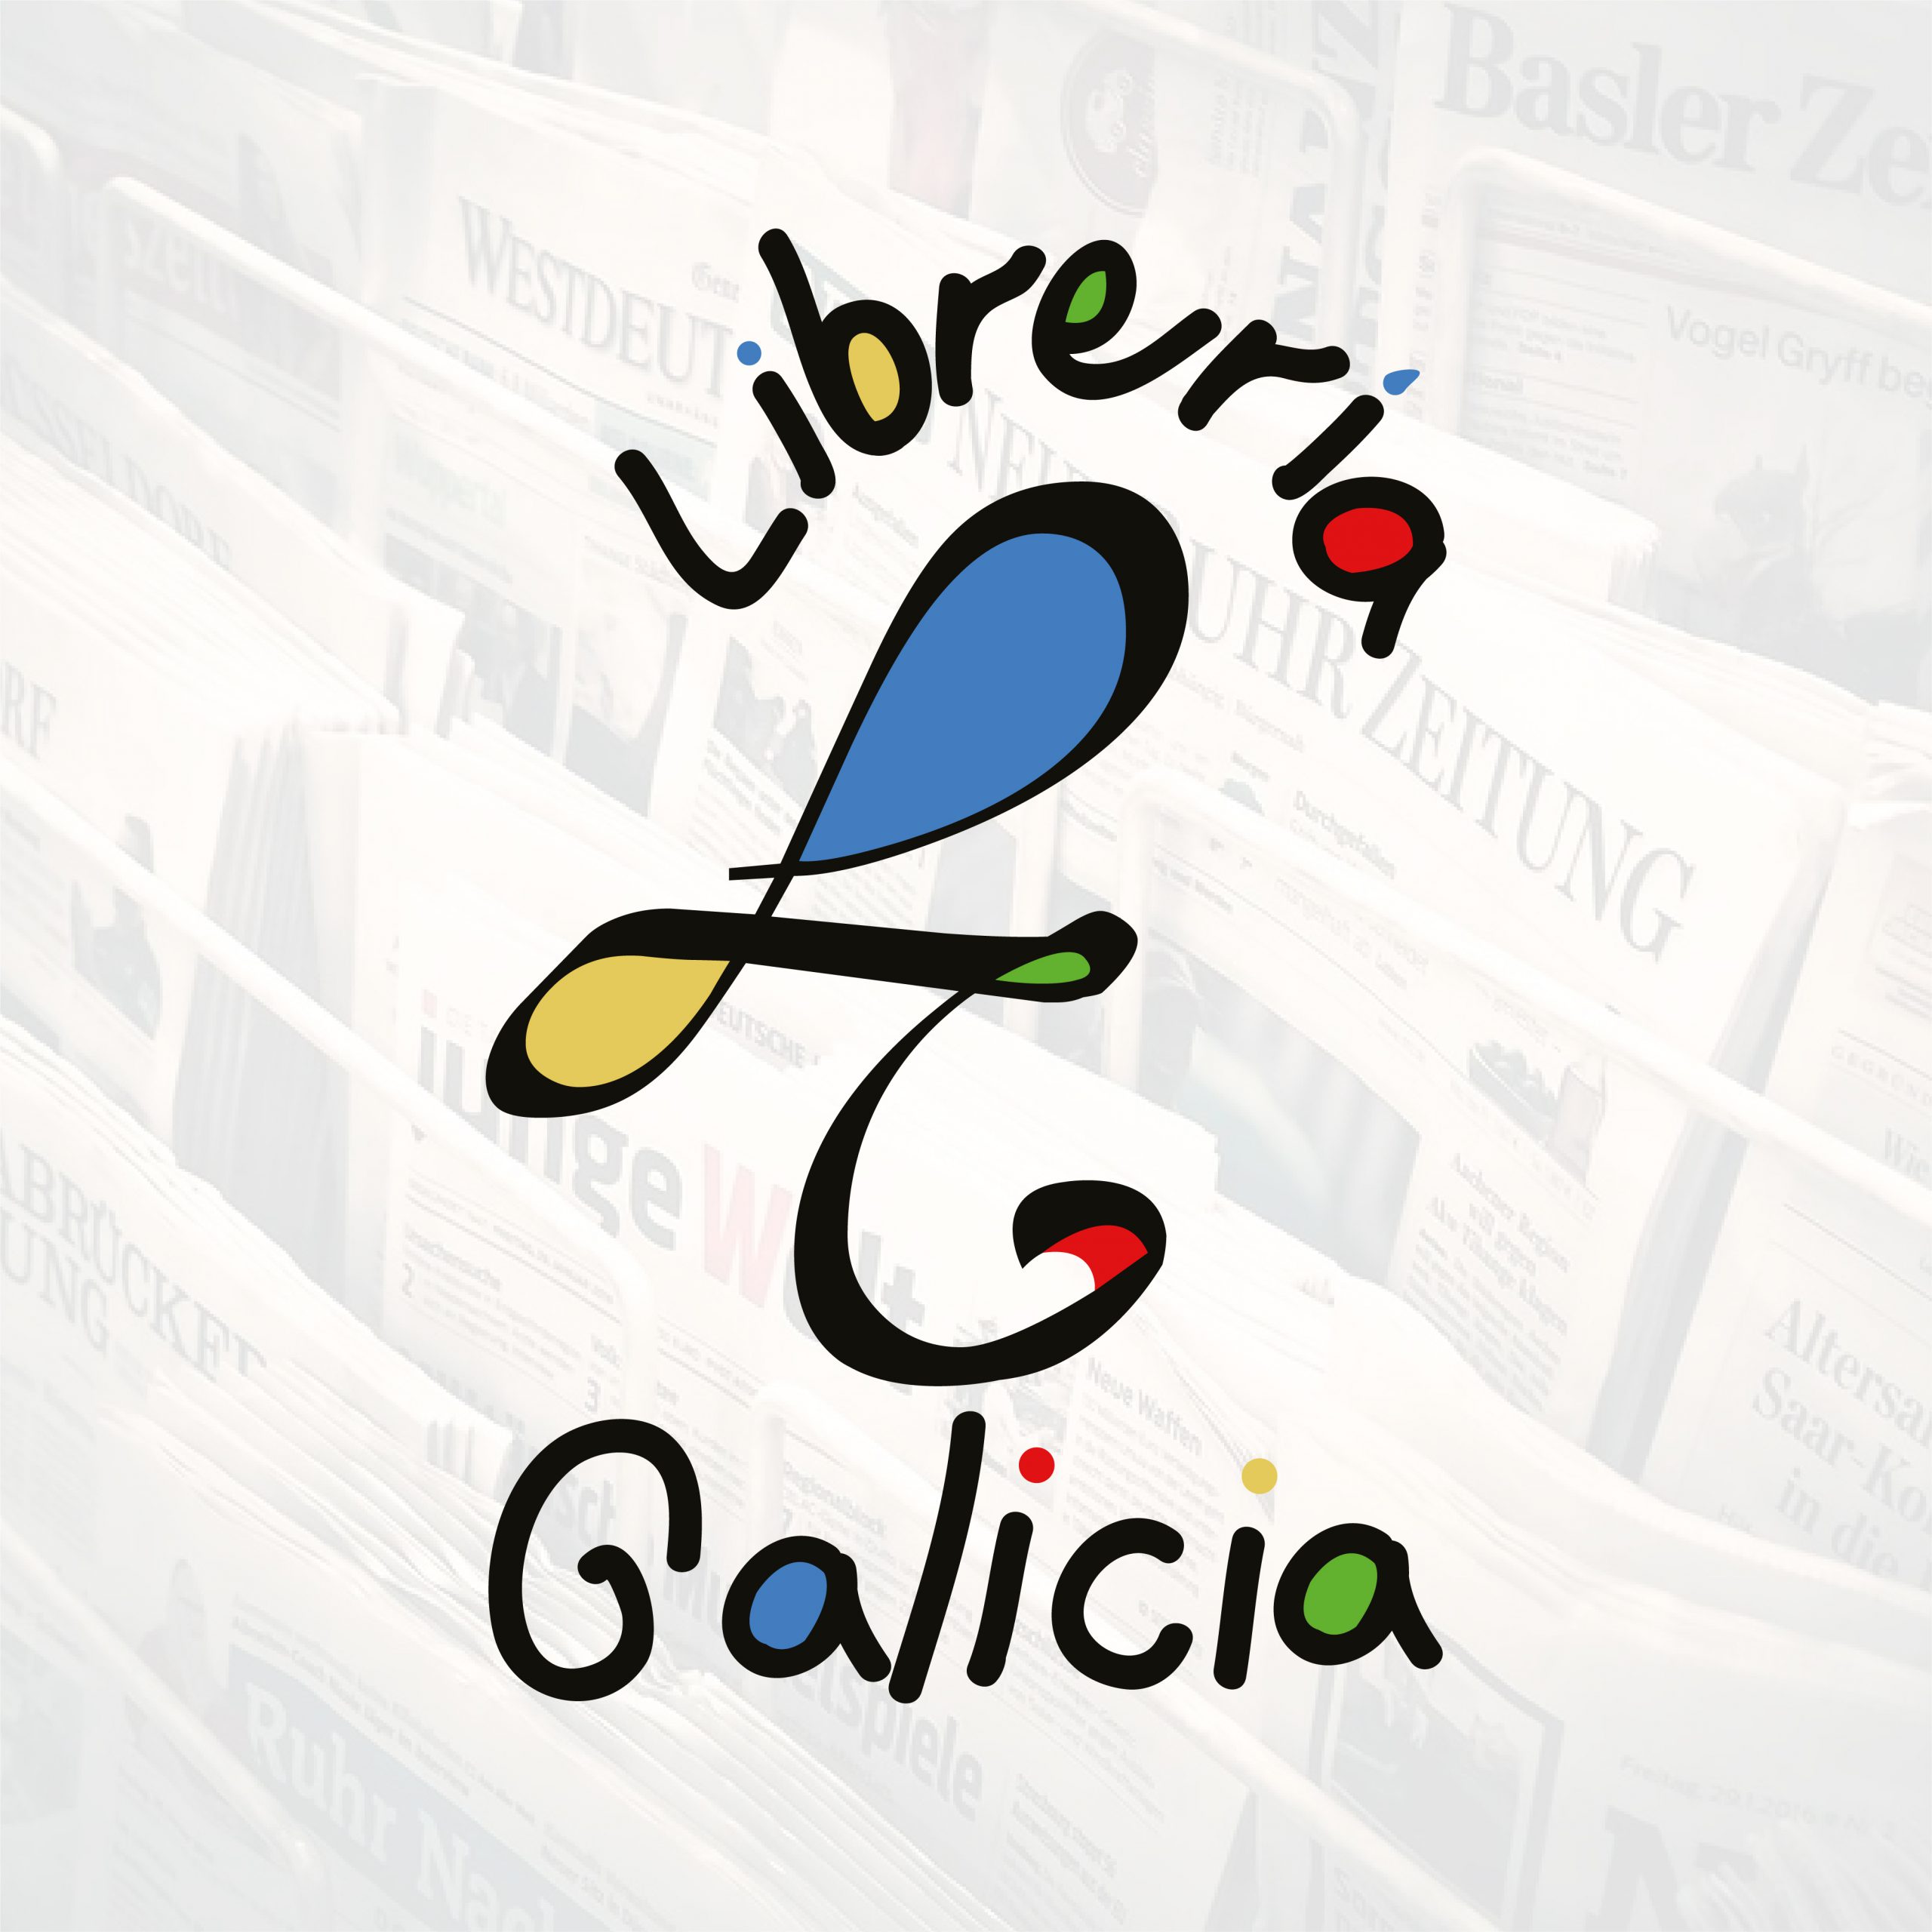 Imagen Corporativa Libreria Galicia